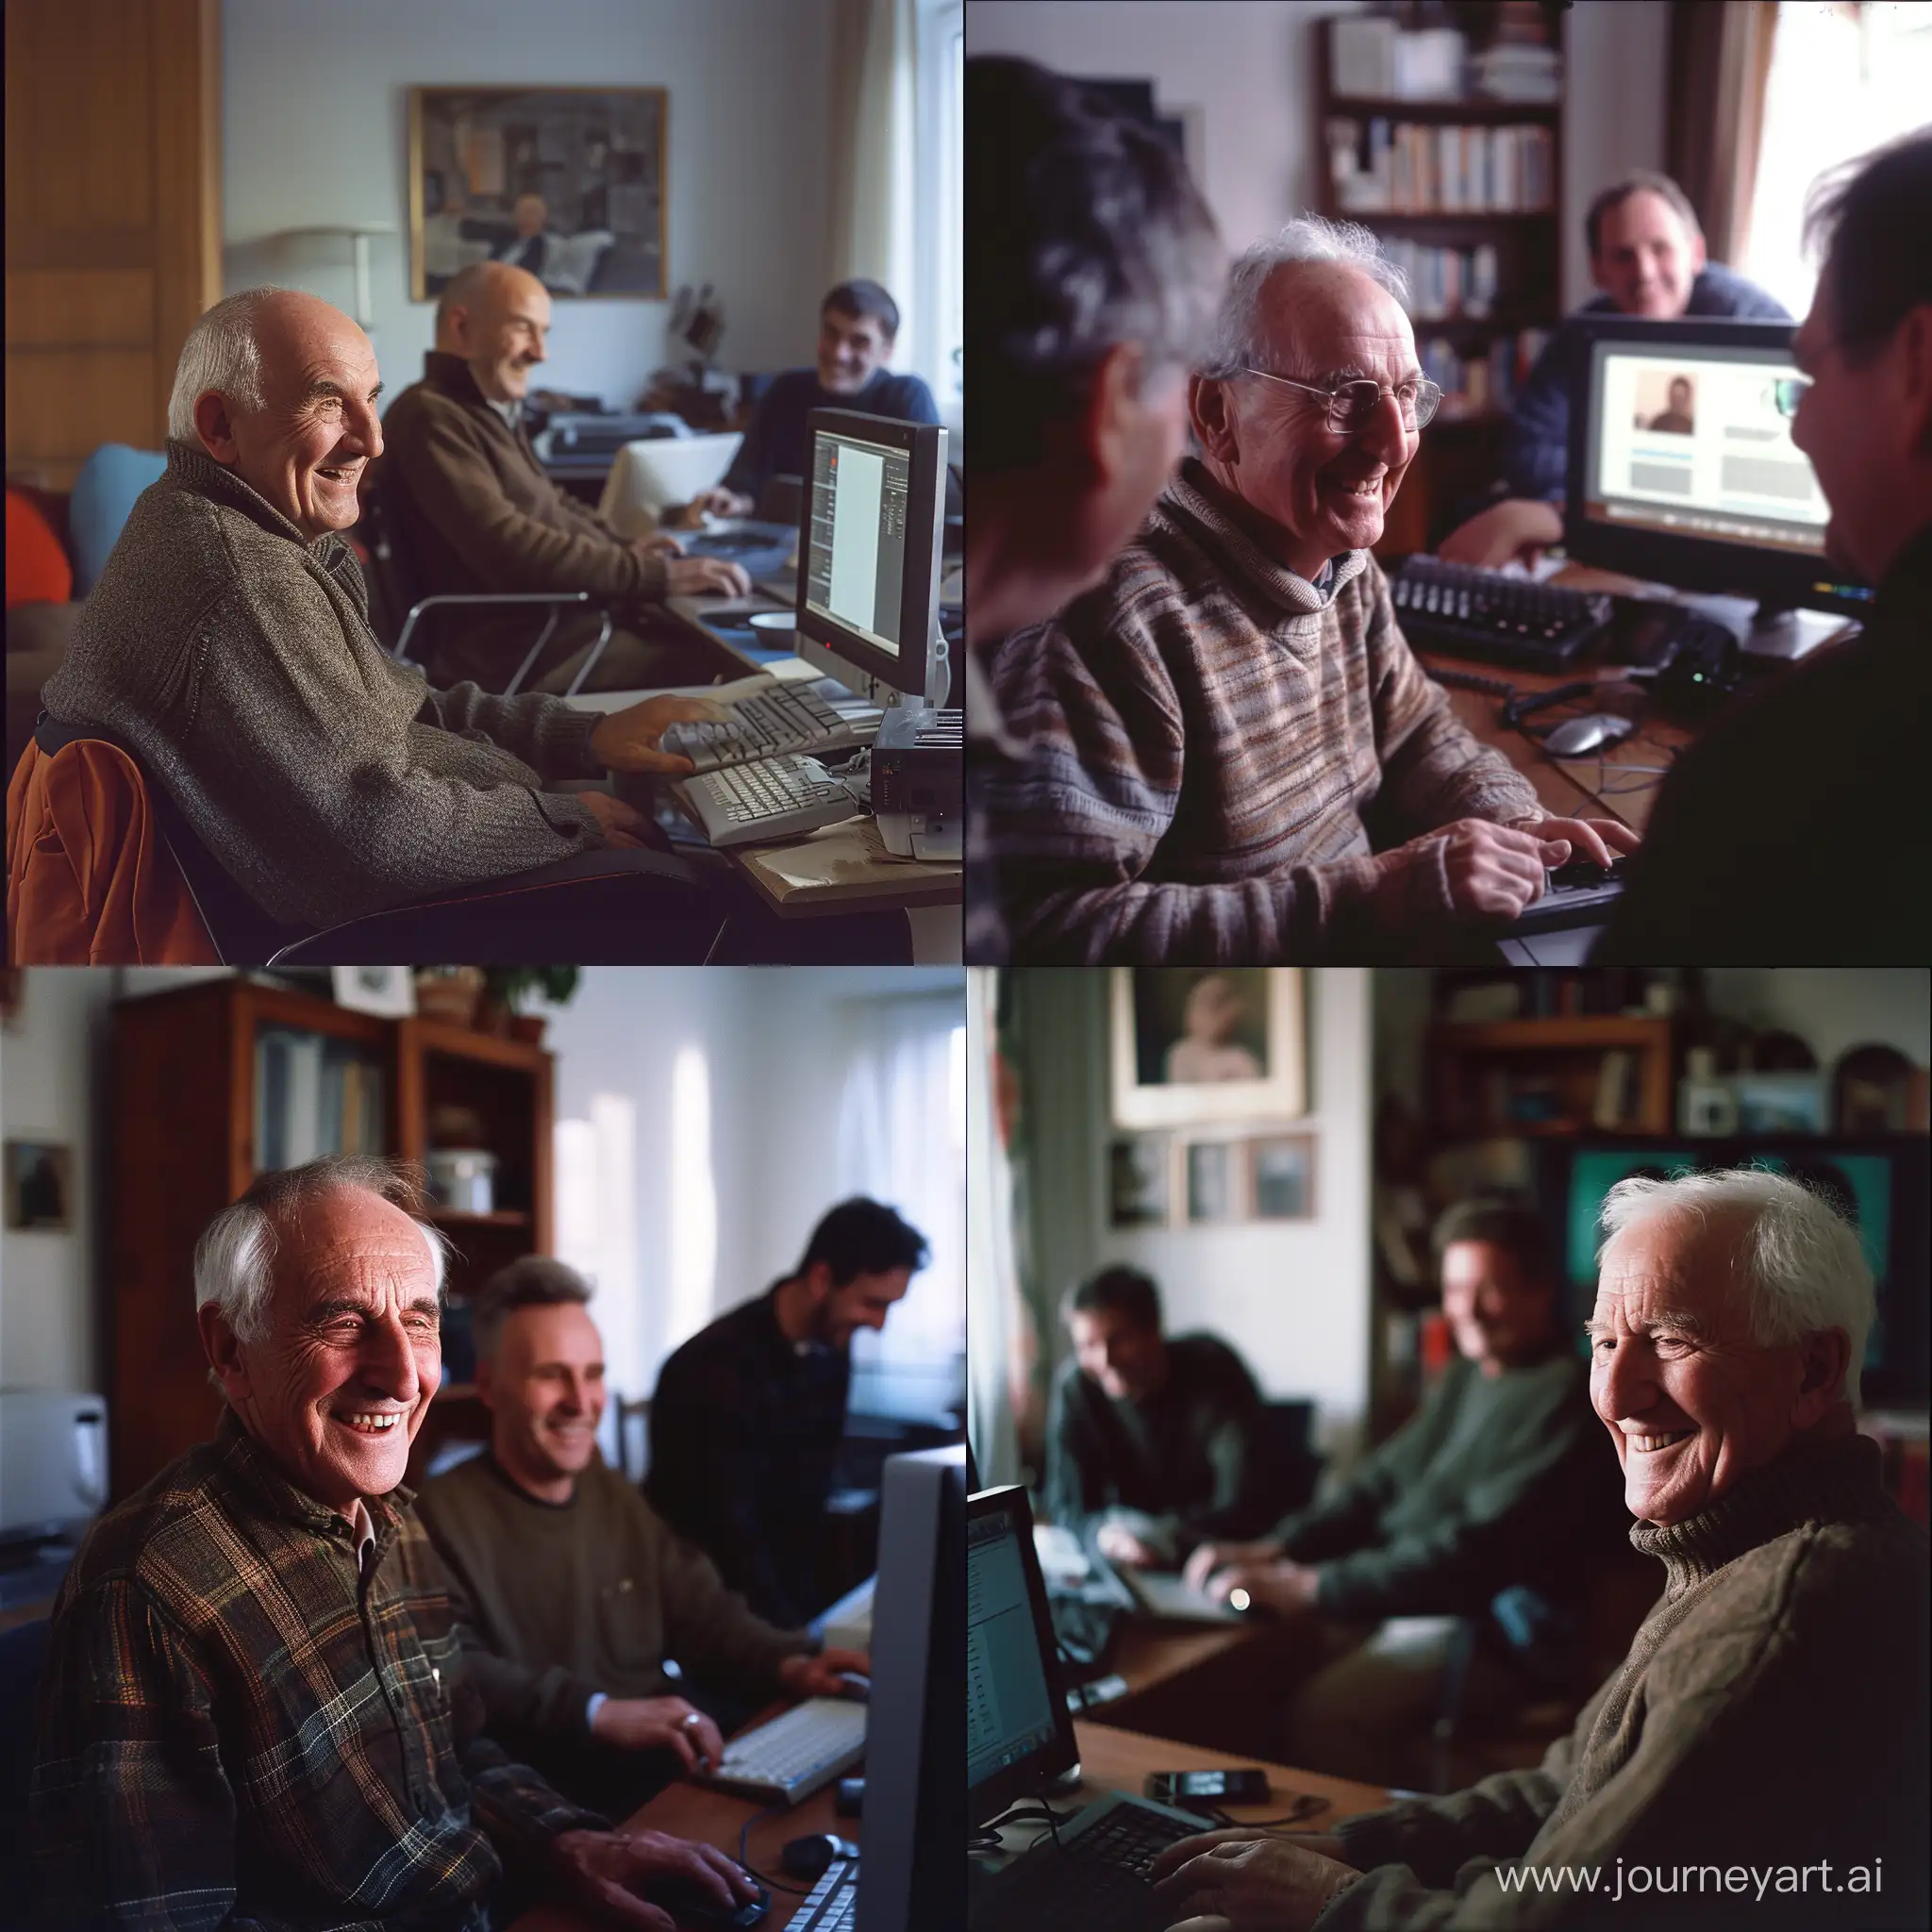 Joyful-Elderly-Man-with-Two-Men-Engaged-in-Computing-Activities